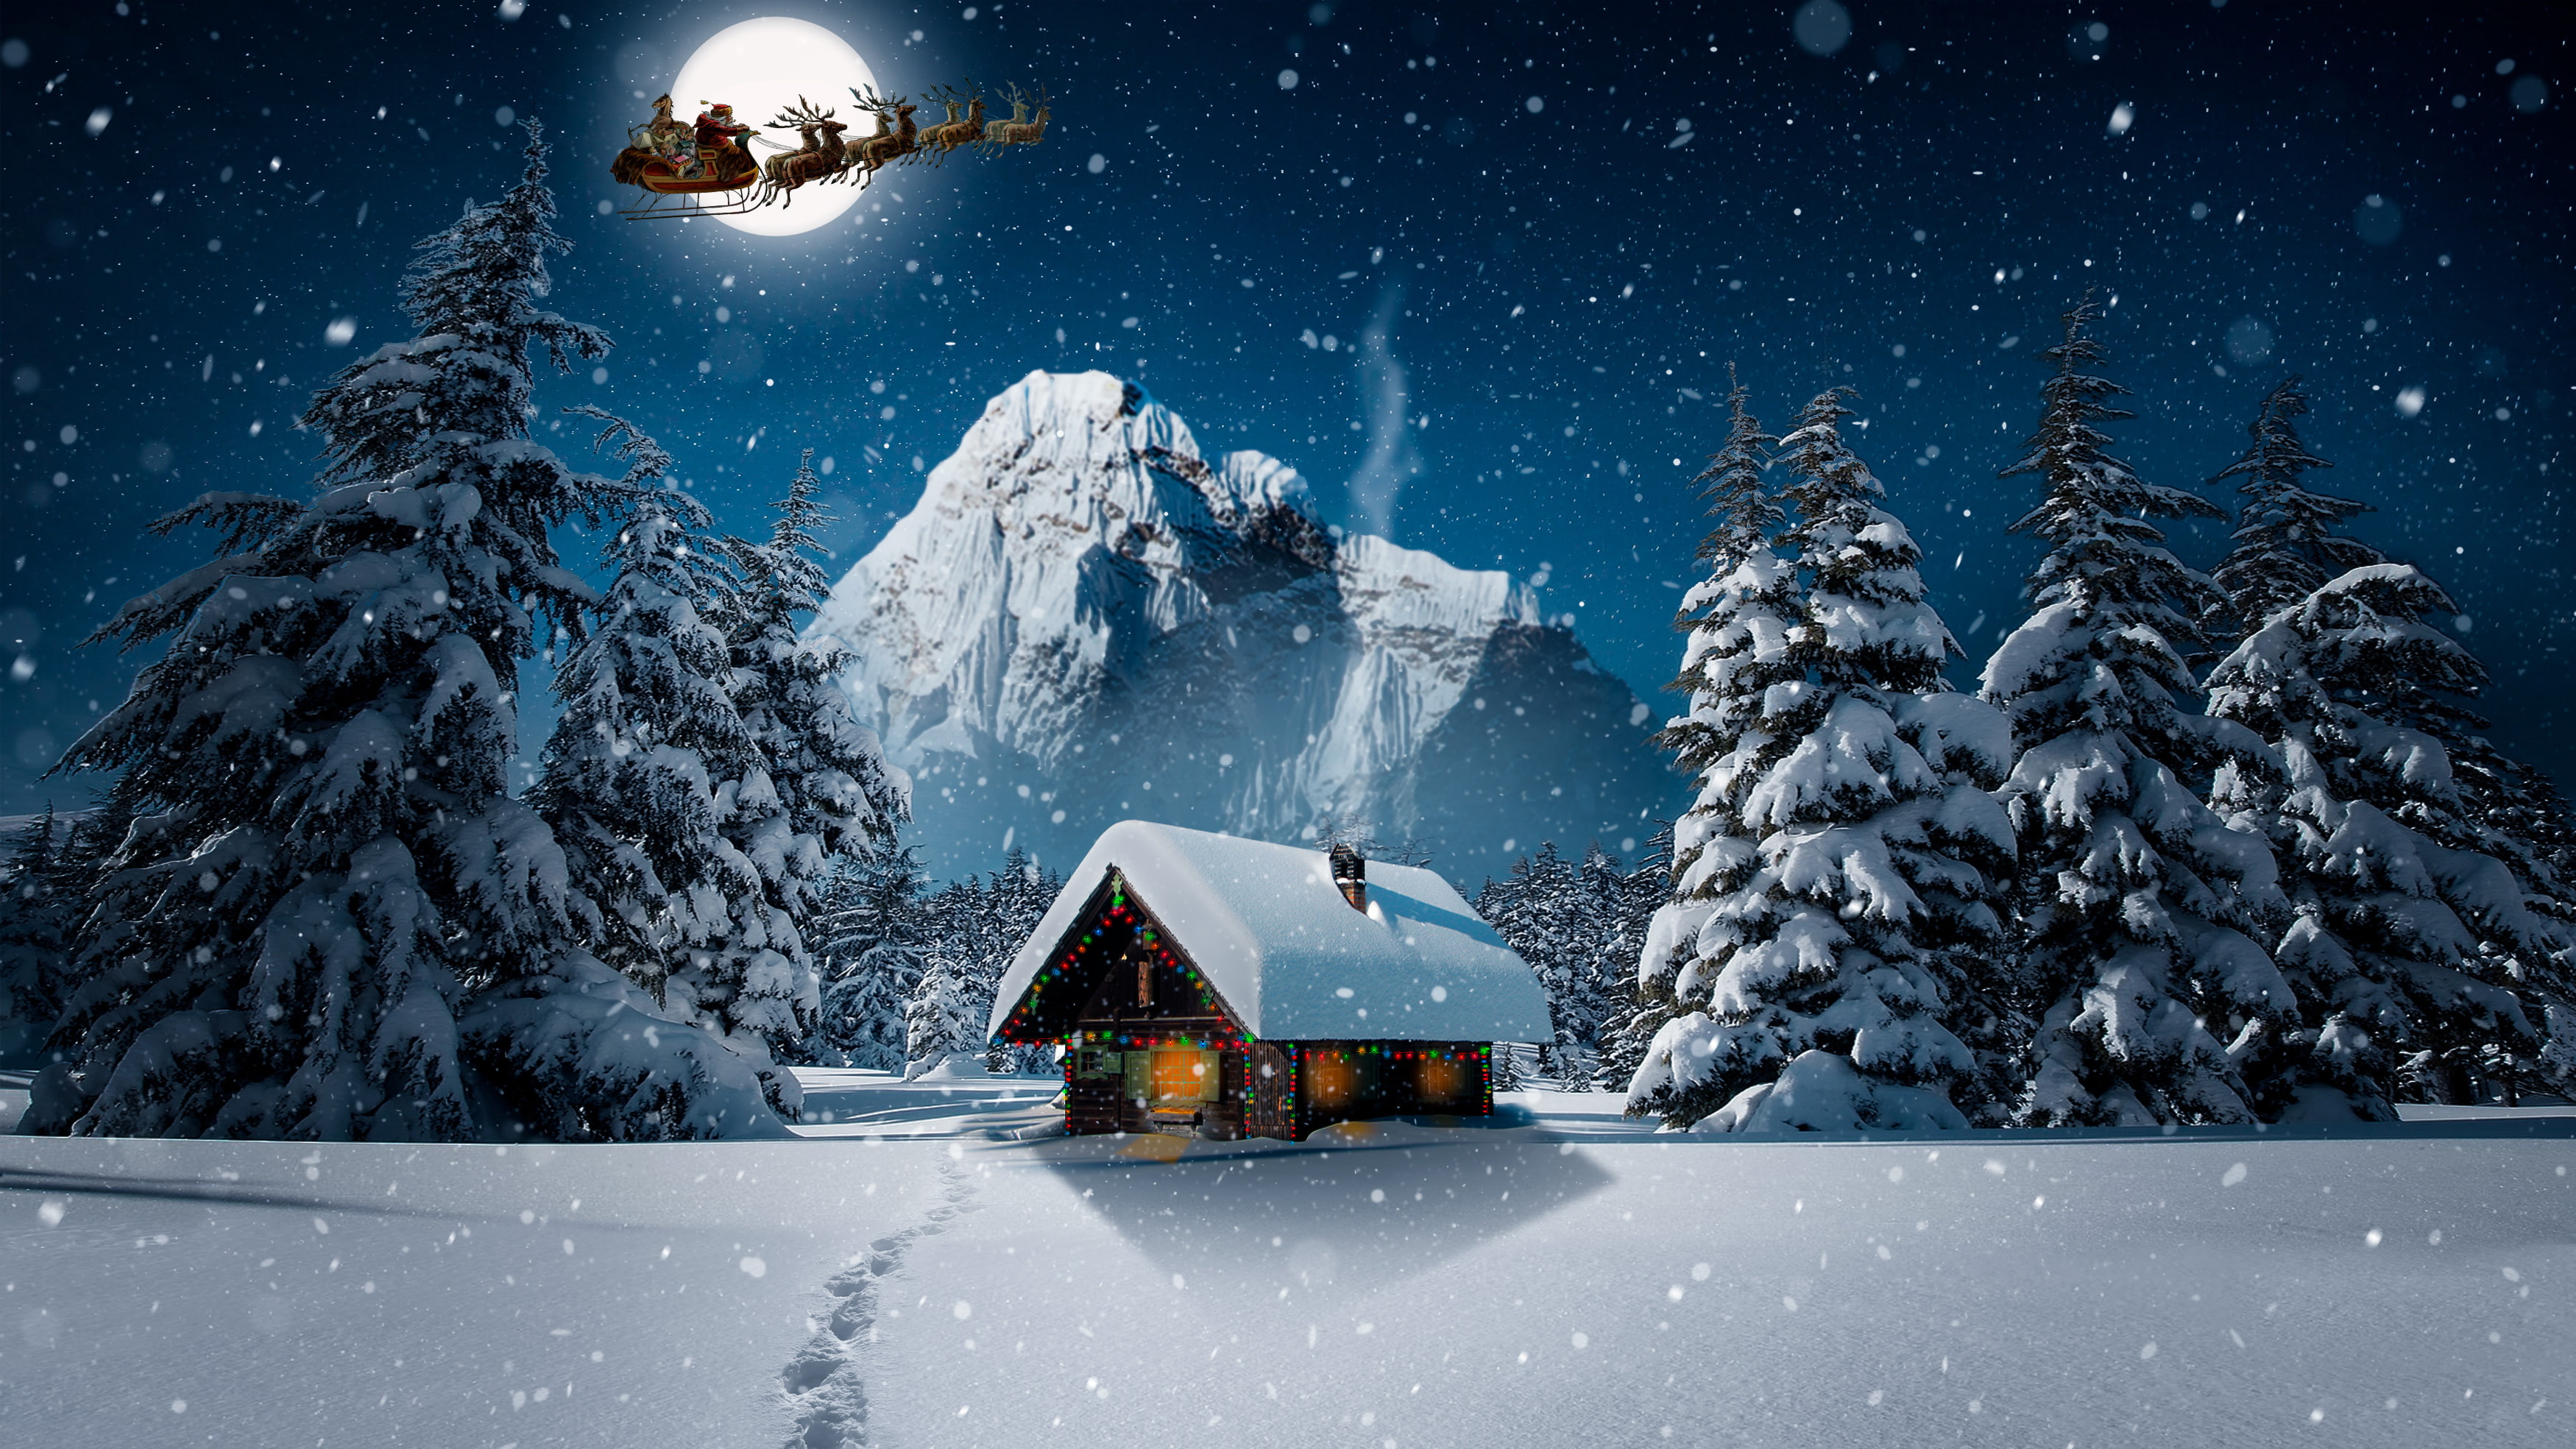 Snowfall, Winter, Santa Claus, Reindeer Chariot, Decoration